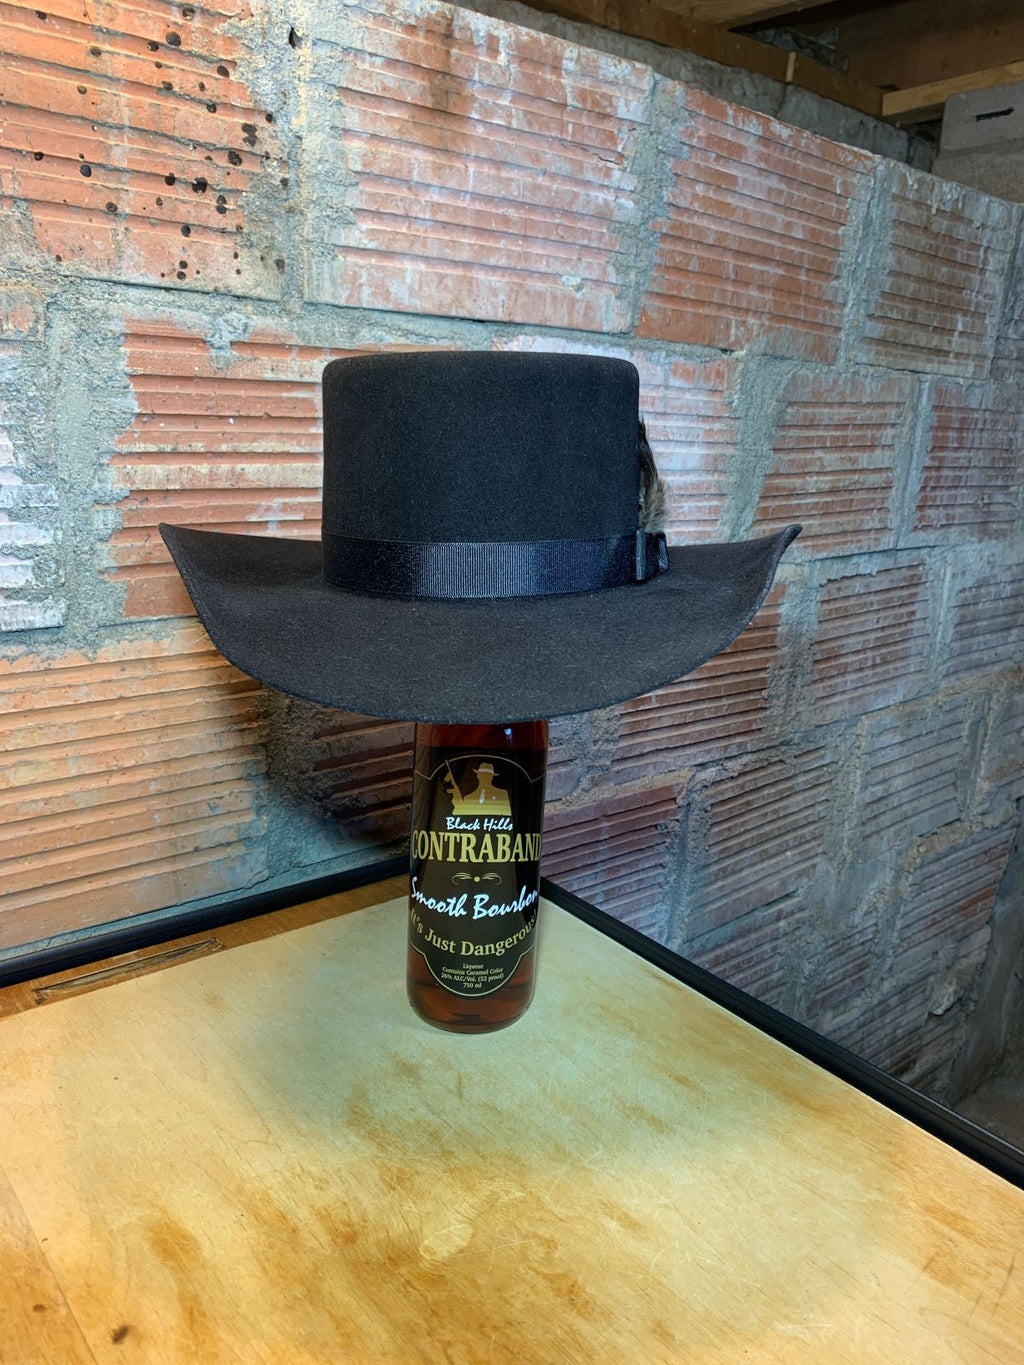 Renegado 6x Mist Grey Fur Felt Cowboy Hat (EXCLUSIVE ITEM